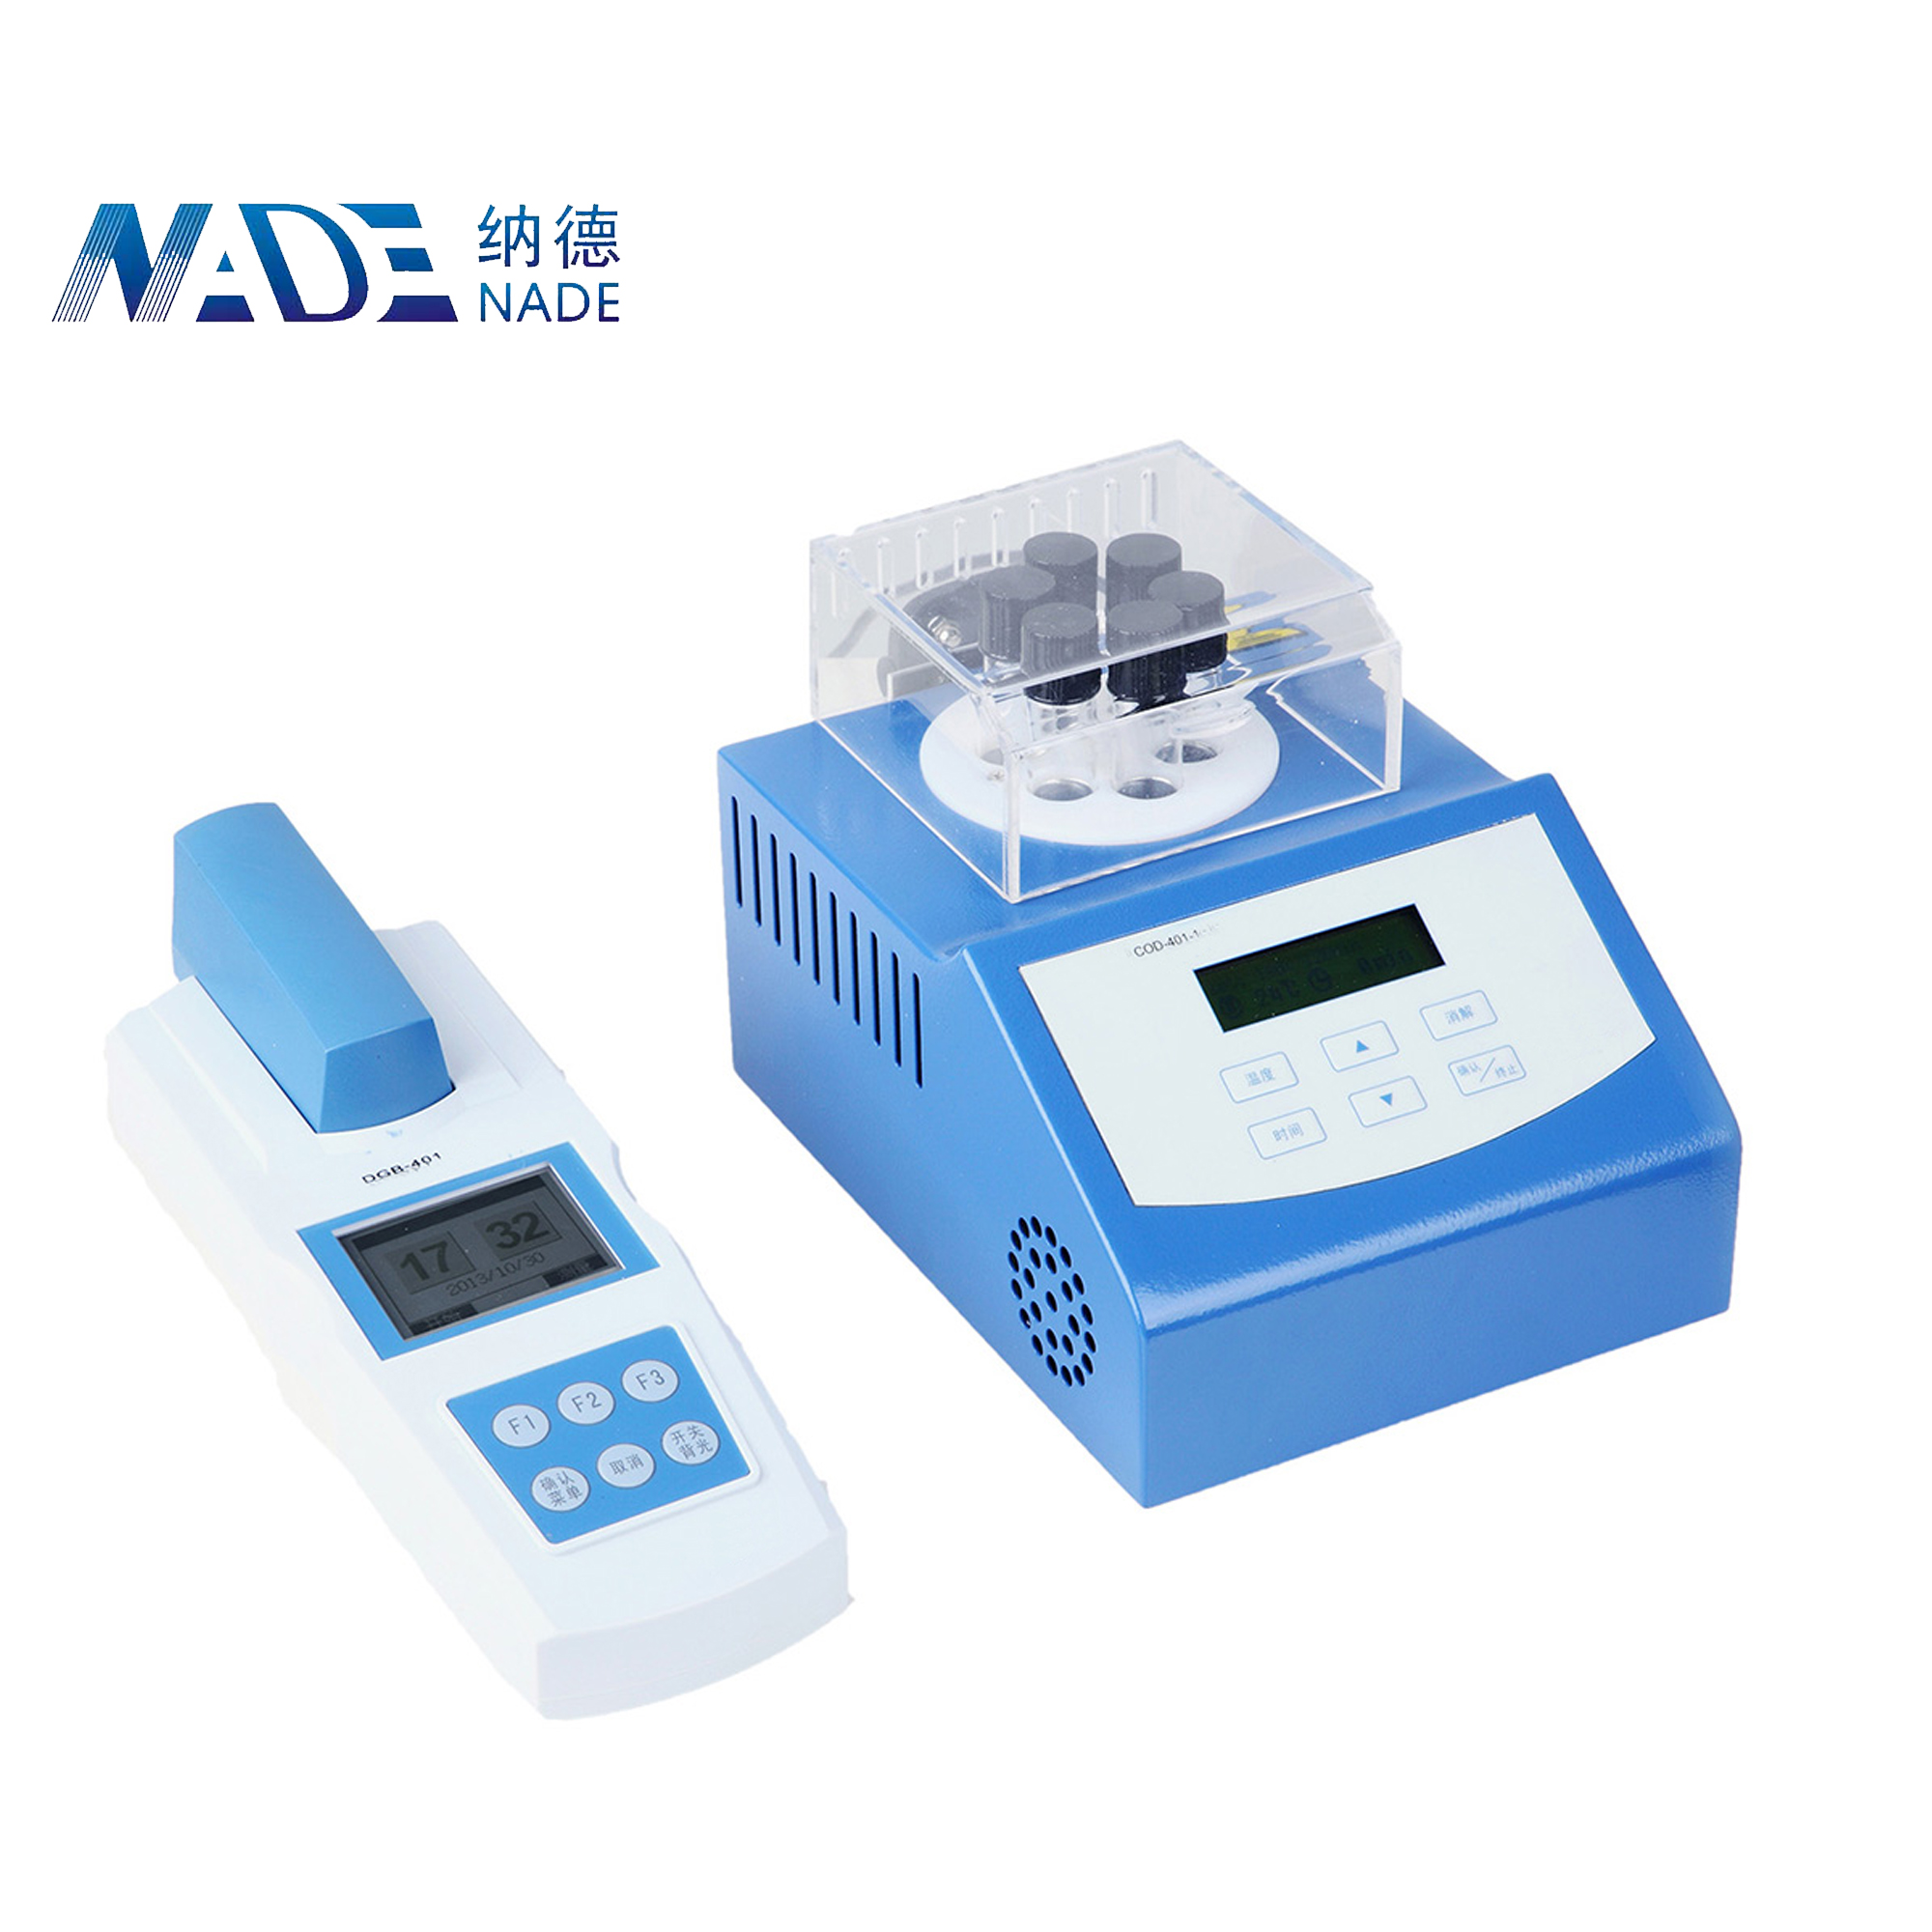 NADE DGB-401 spectrophotometric method Portable Multi parameter Water Quality Analyzer